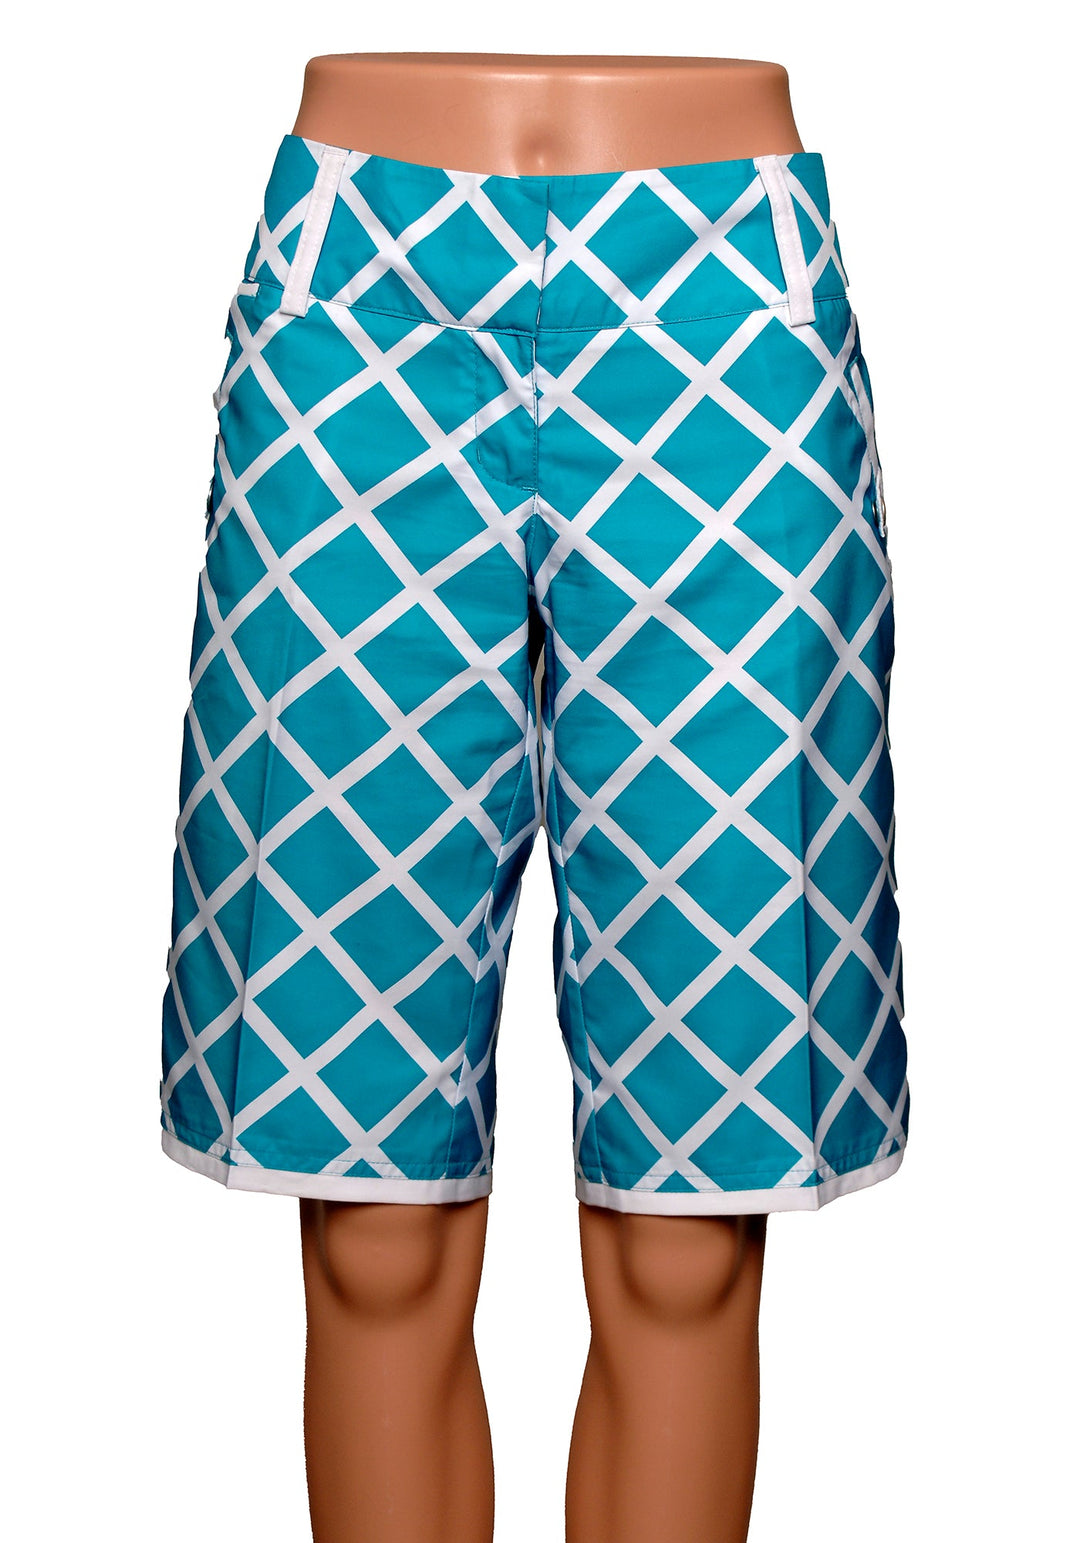 Adidas Bermuda Golf Short - Teal - Size 4 - Skorzie